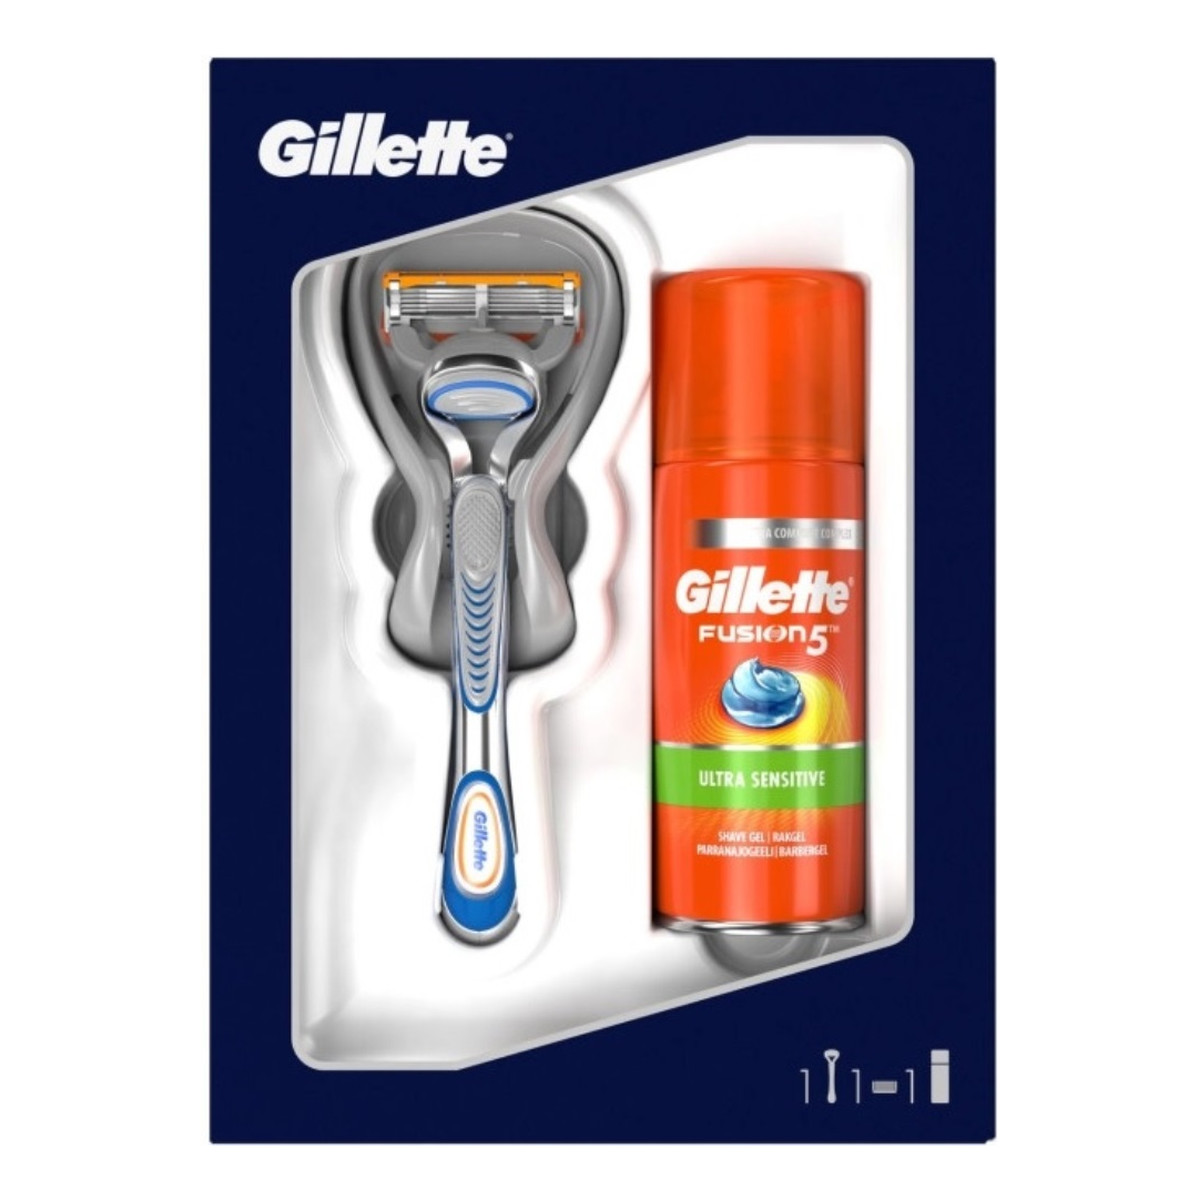 Gillette Fusion5 zestaw maszynka do golenia + Ultra Sensitive żel do golenia 75ml